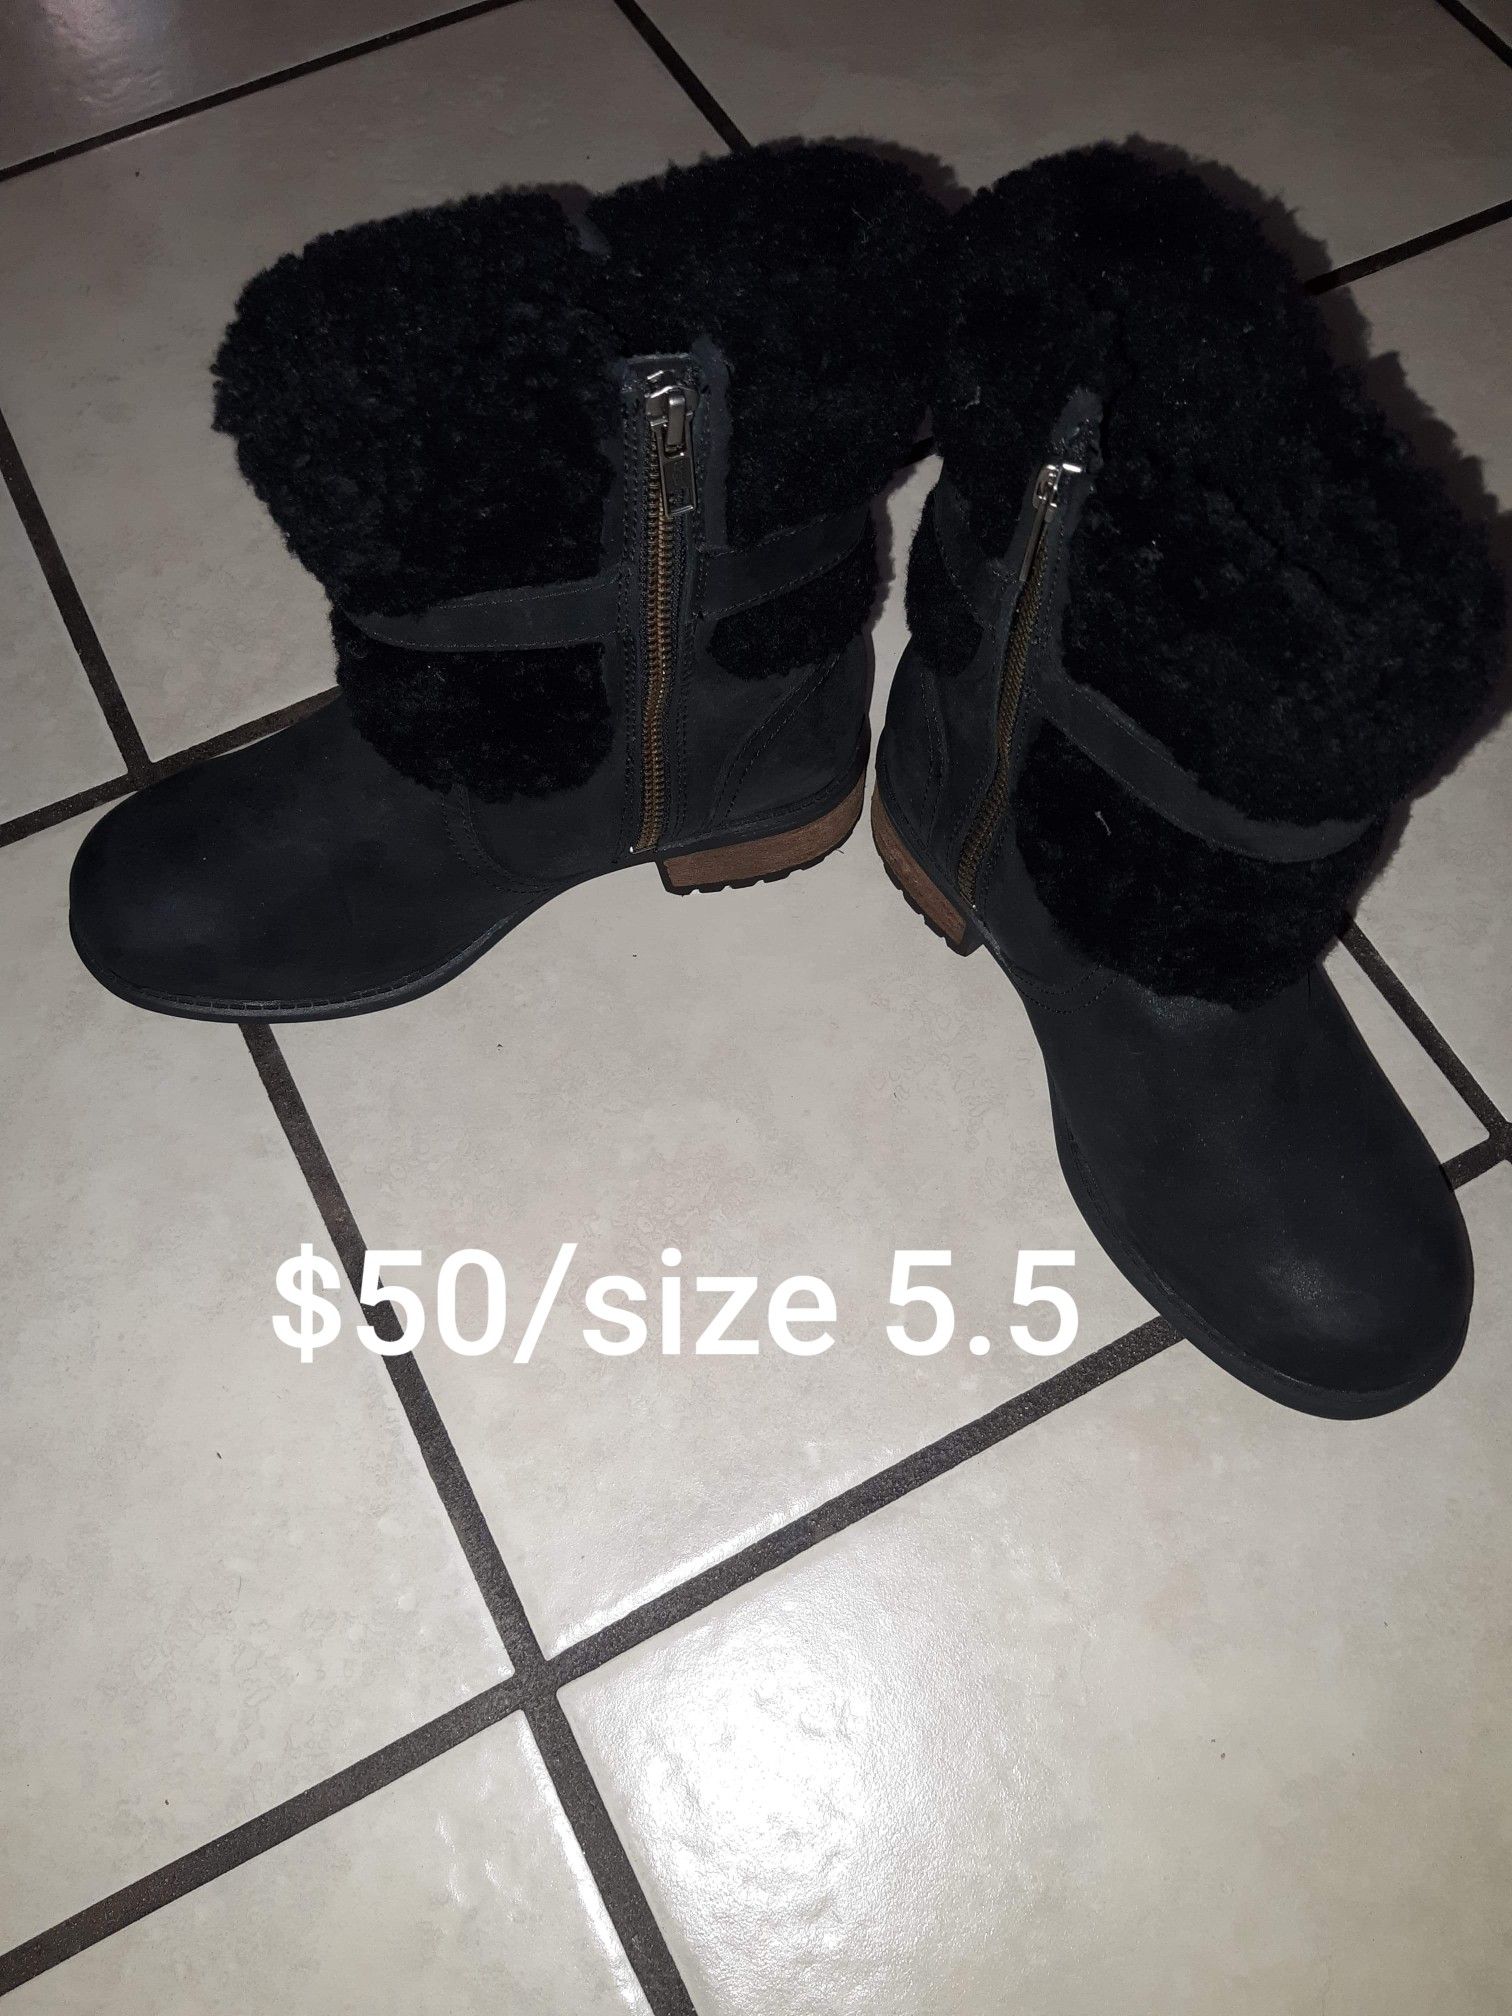 Uggs black boots $50